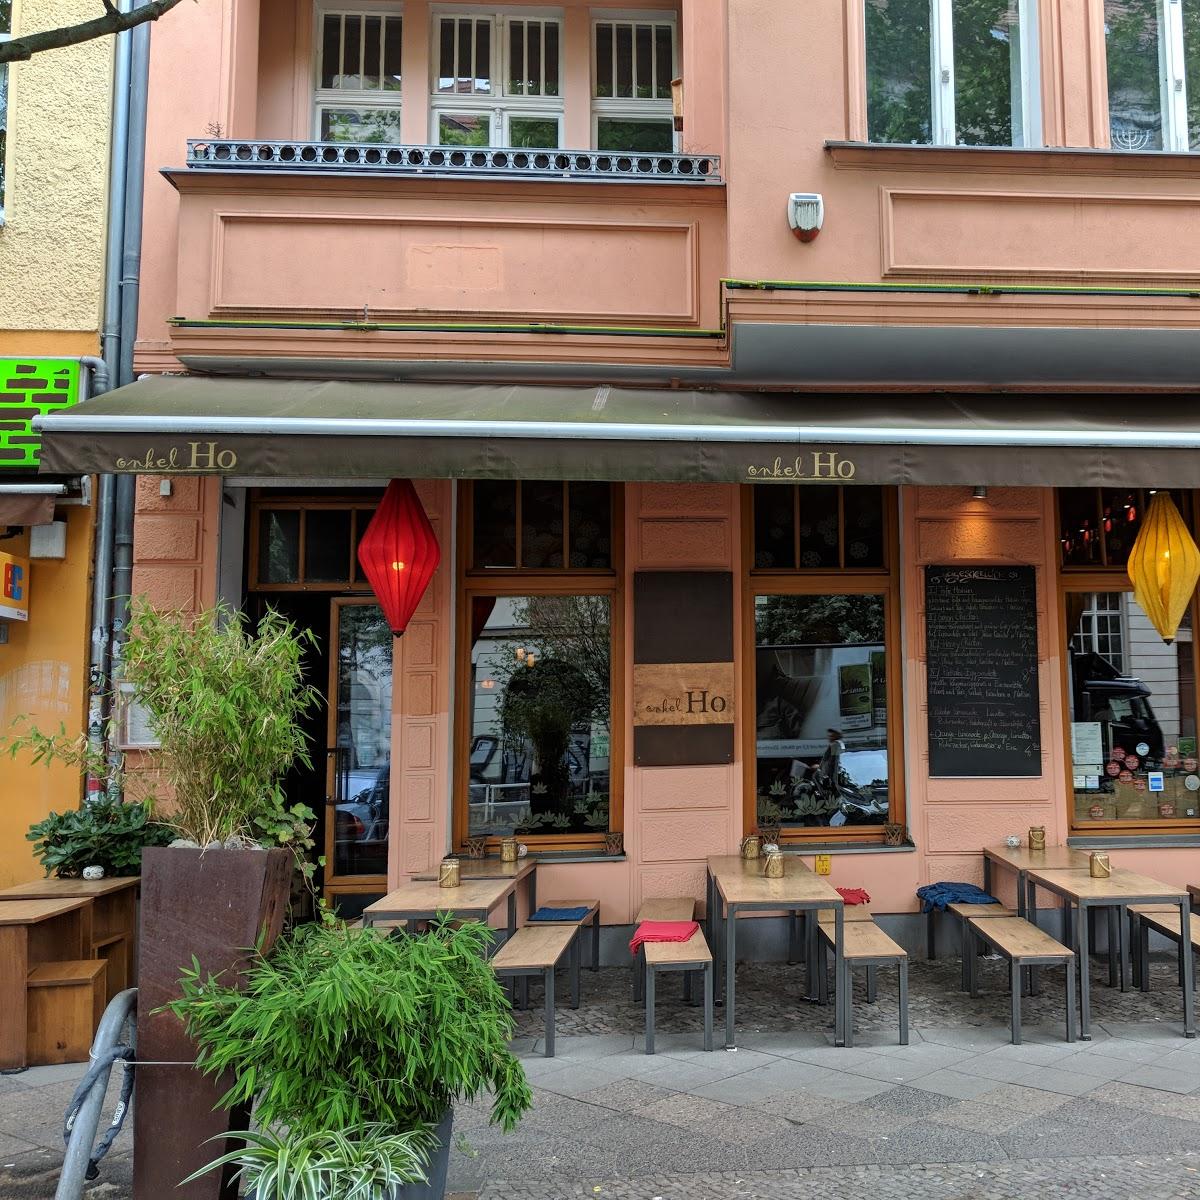 Restaurant "Onkel Ho" in Berlin